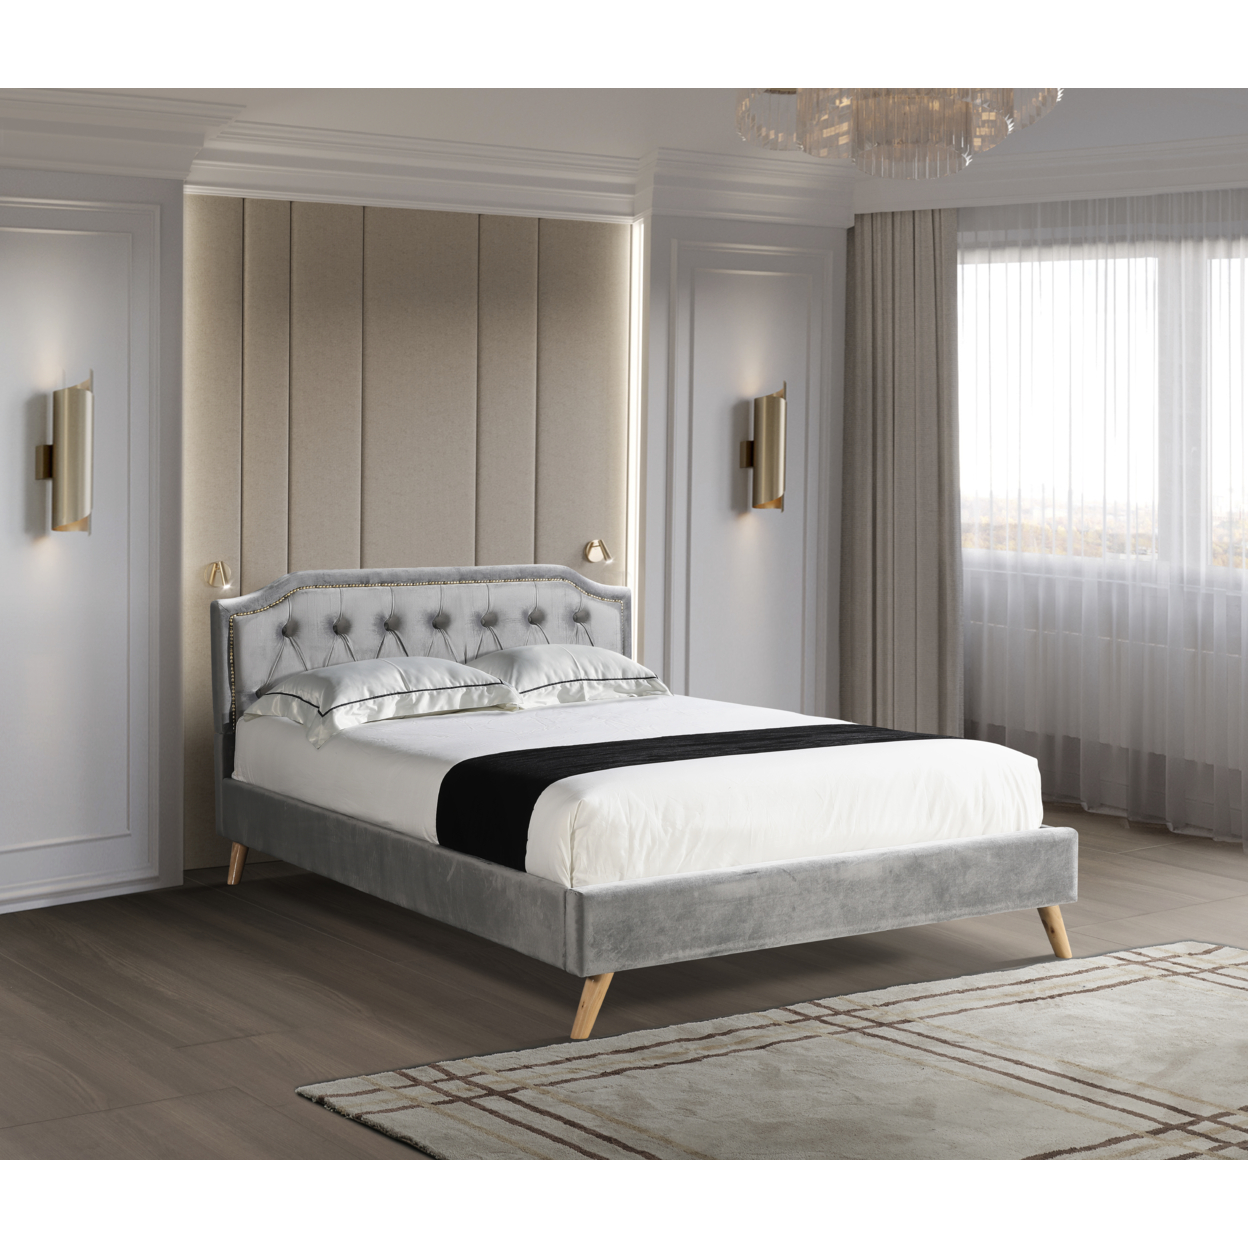 Full Size upholstered platform bed gray fabric bed frame